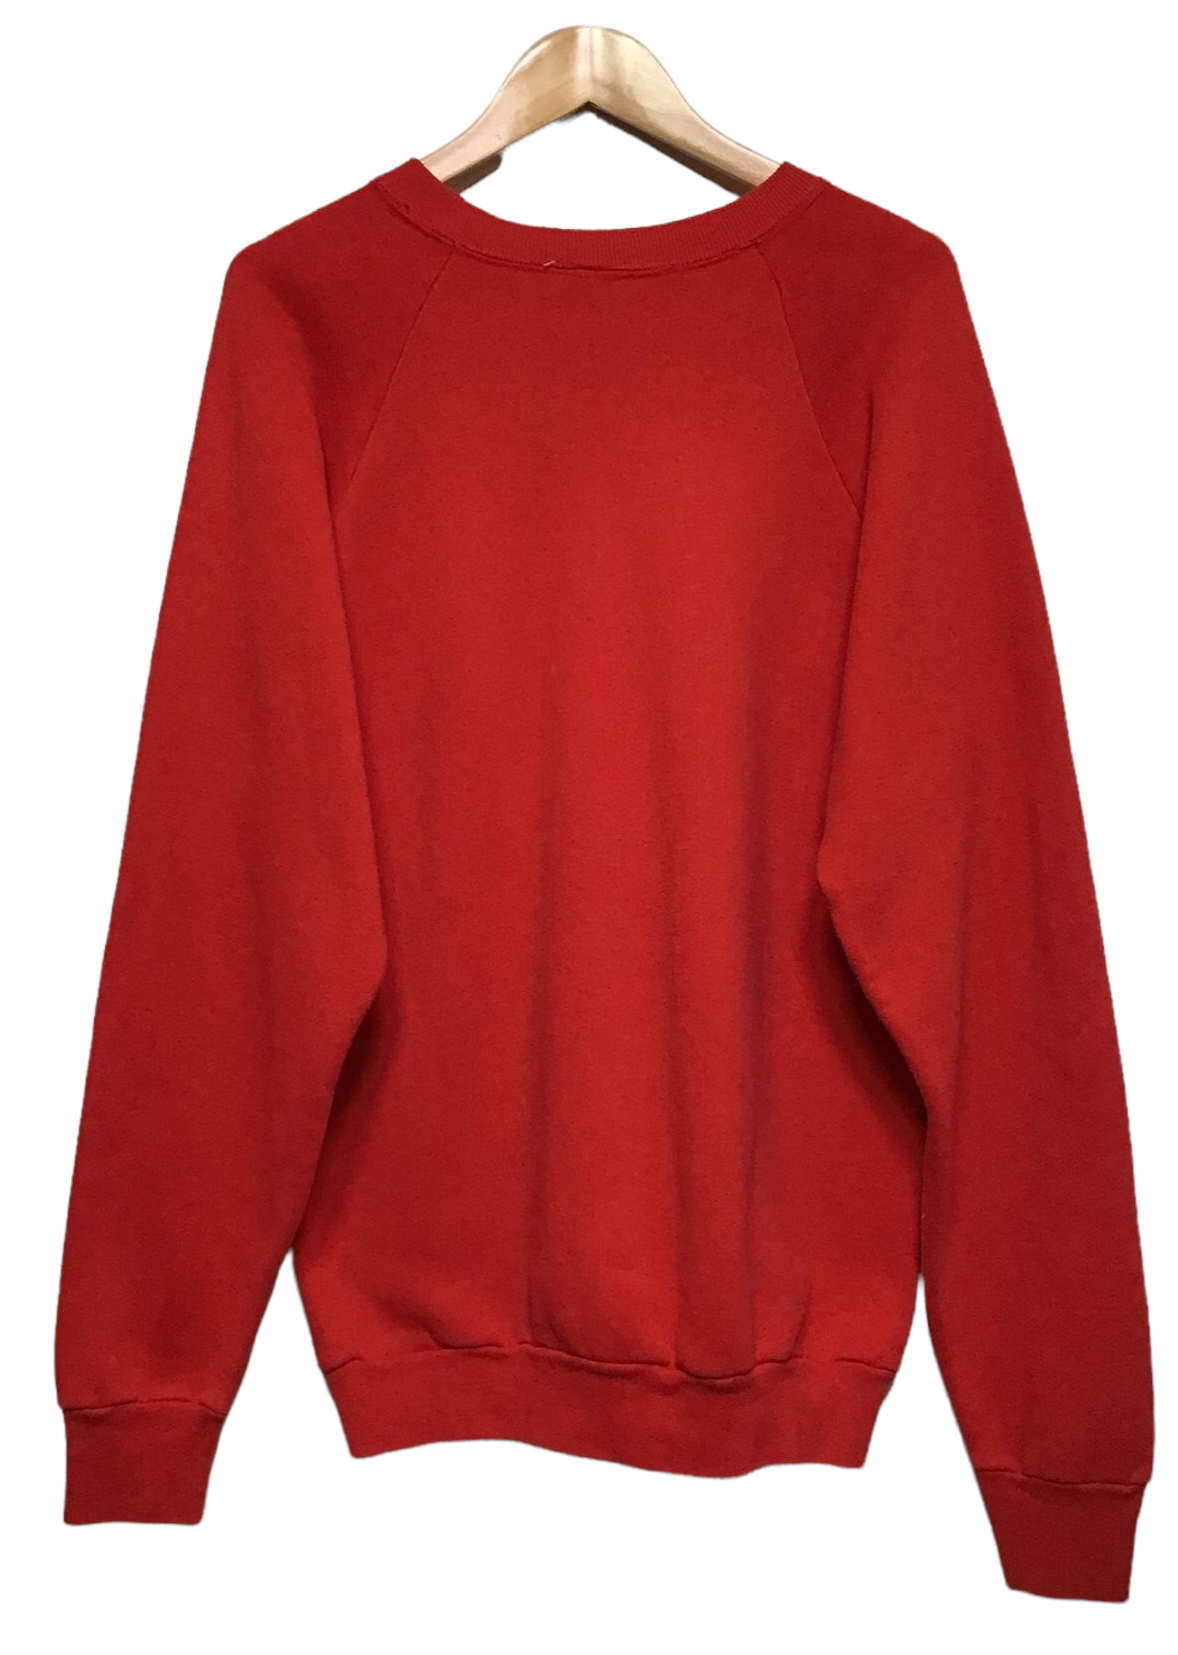 Acadia University Sweatshirt (Size L)